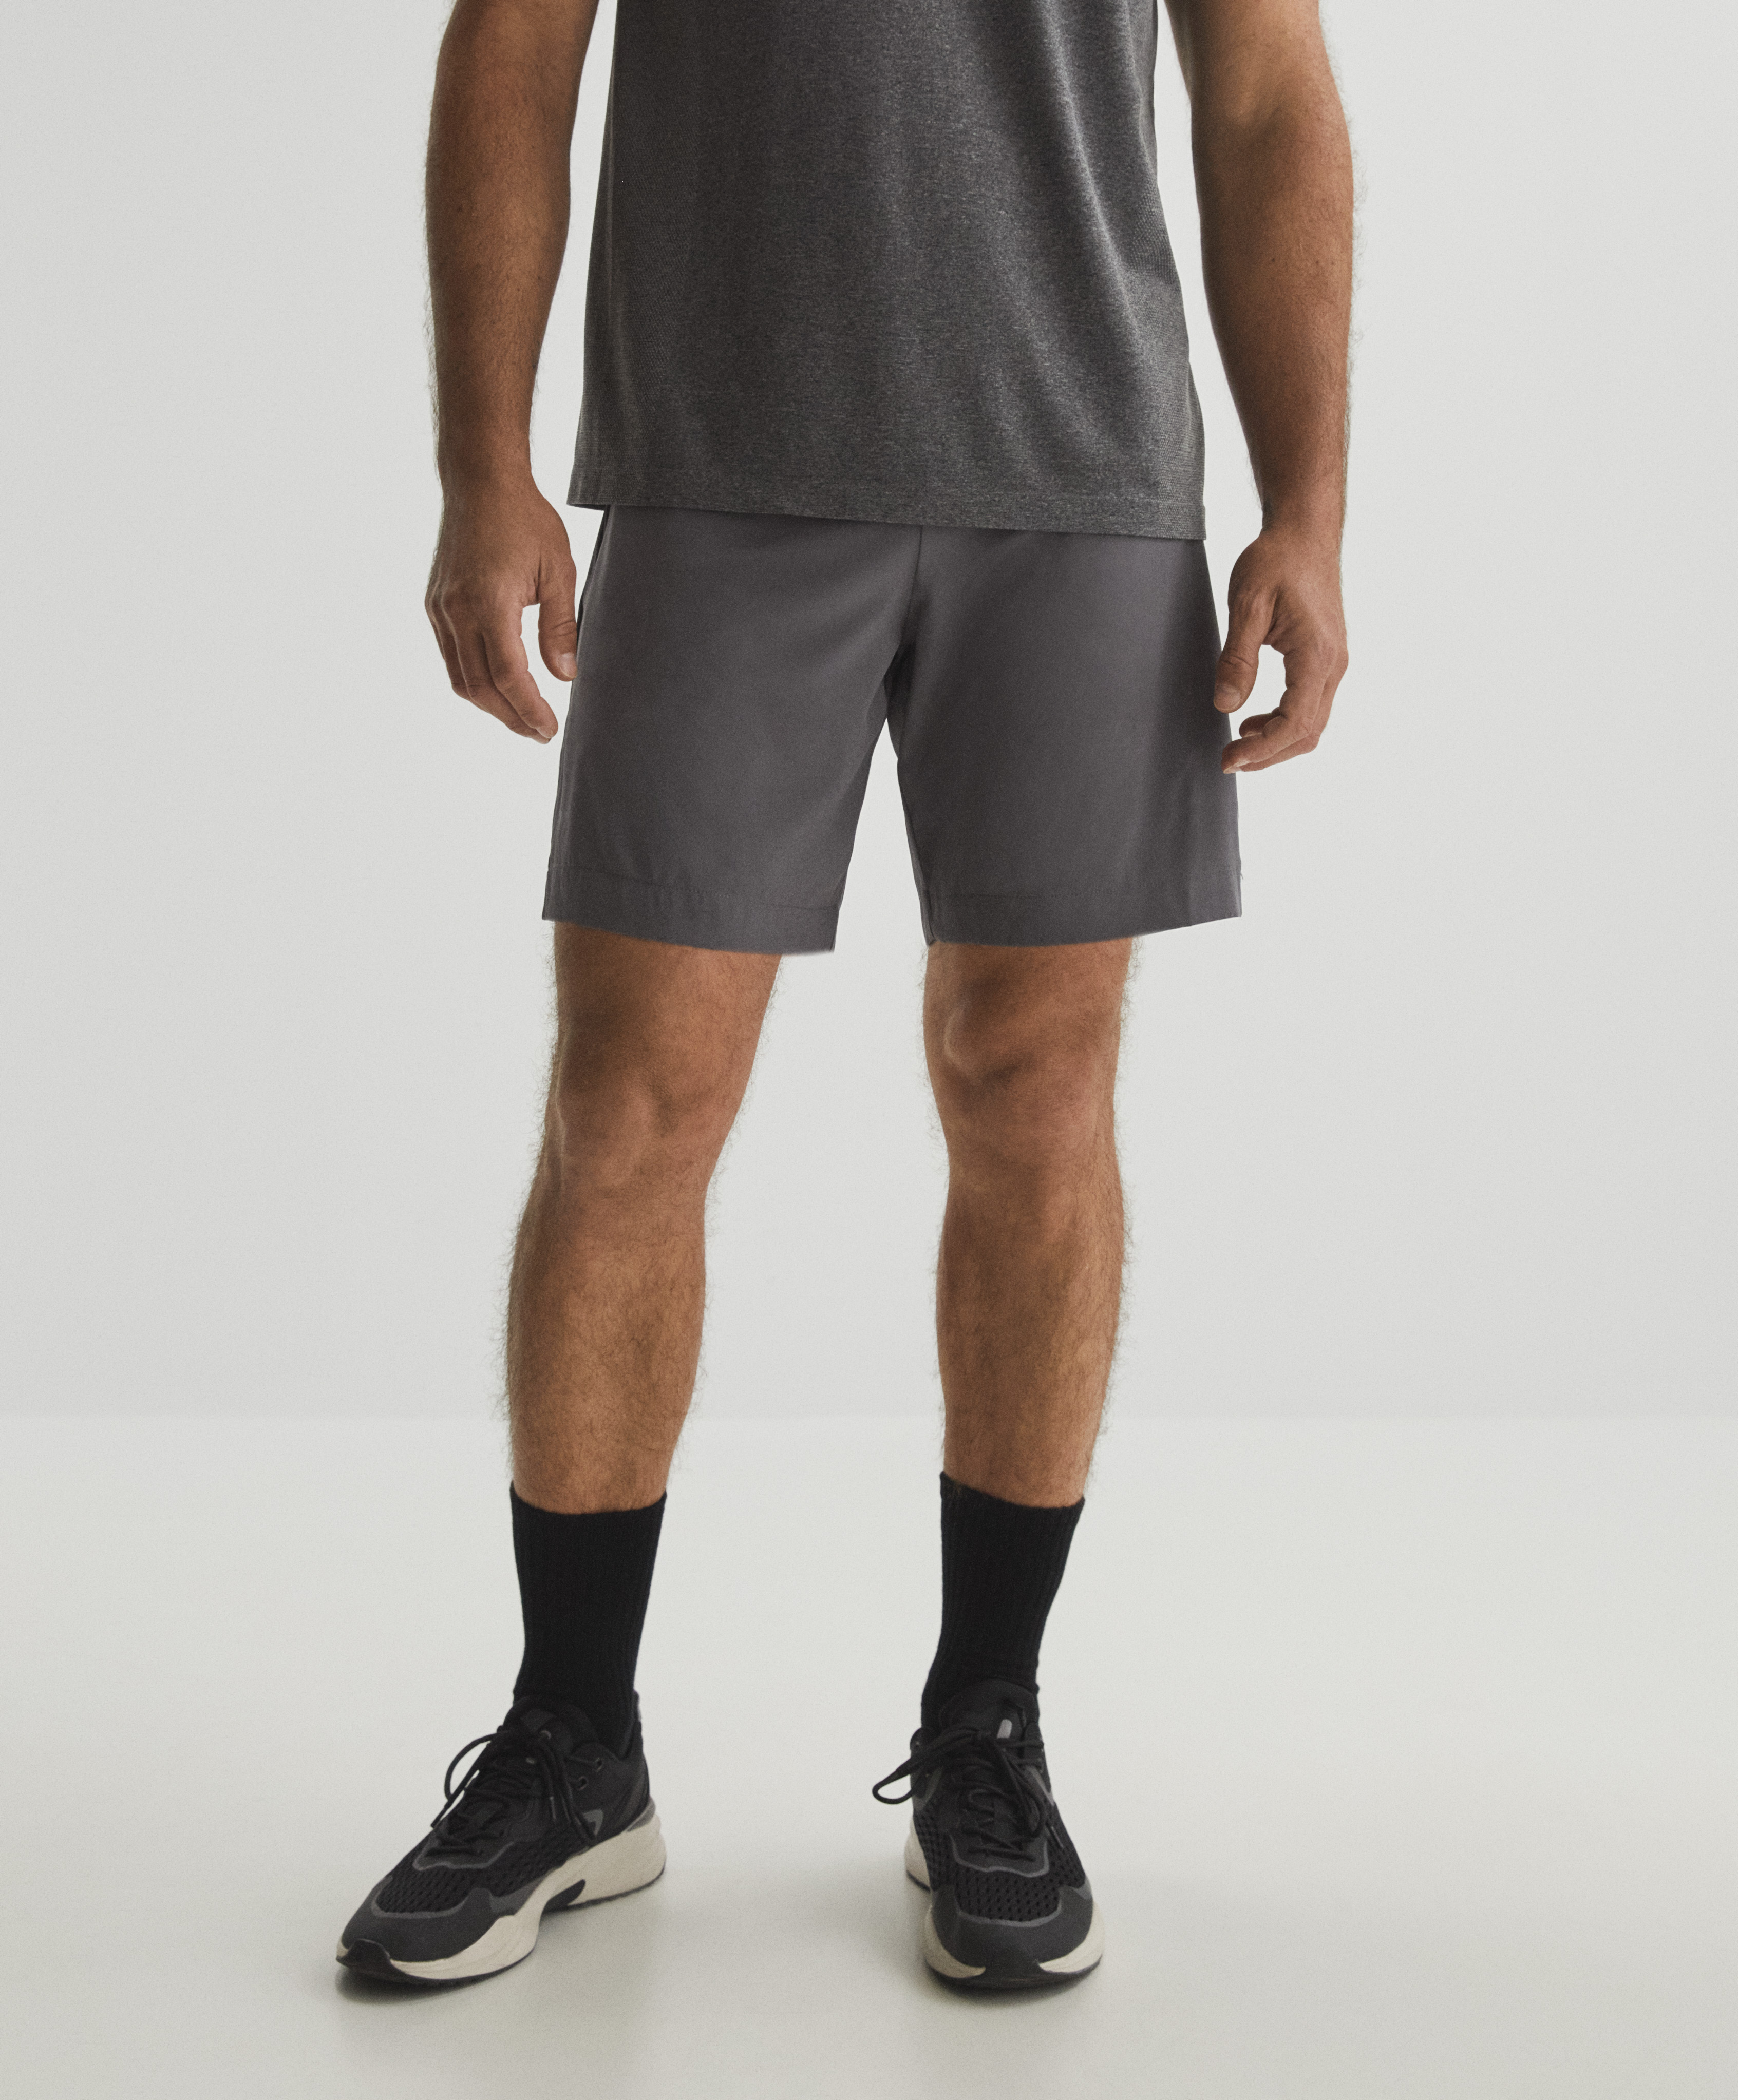 18 cm 2-in-1 training shorts